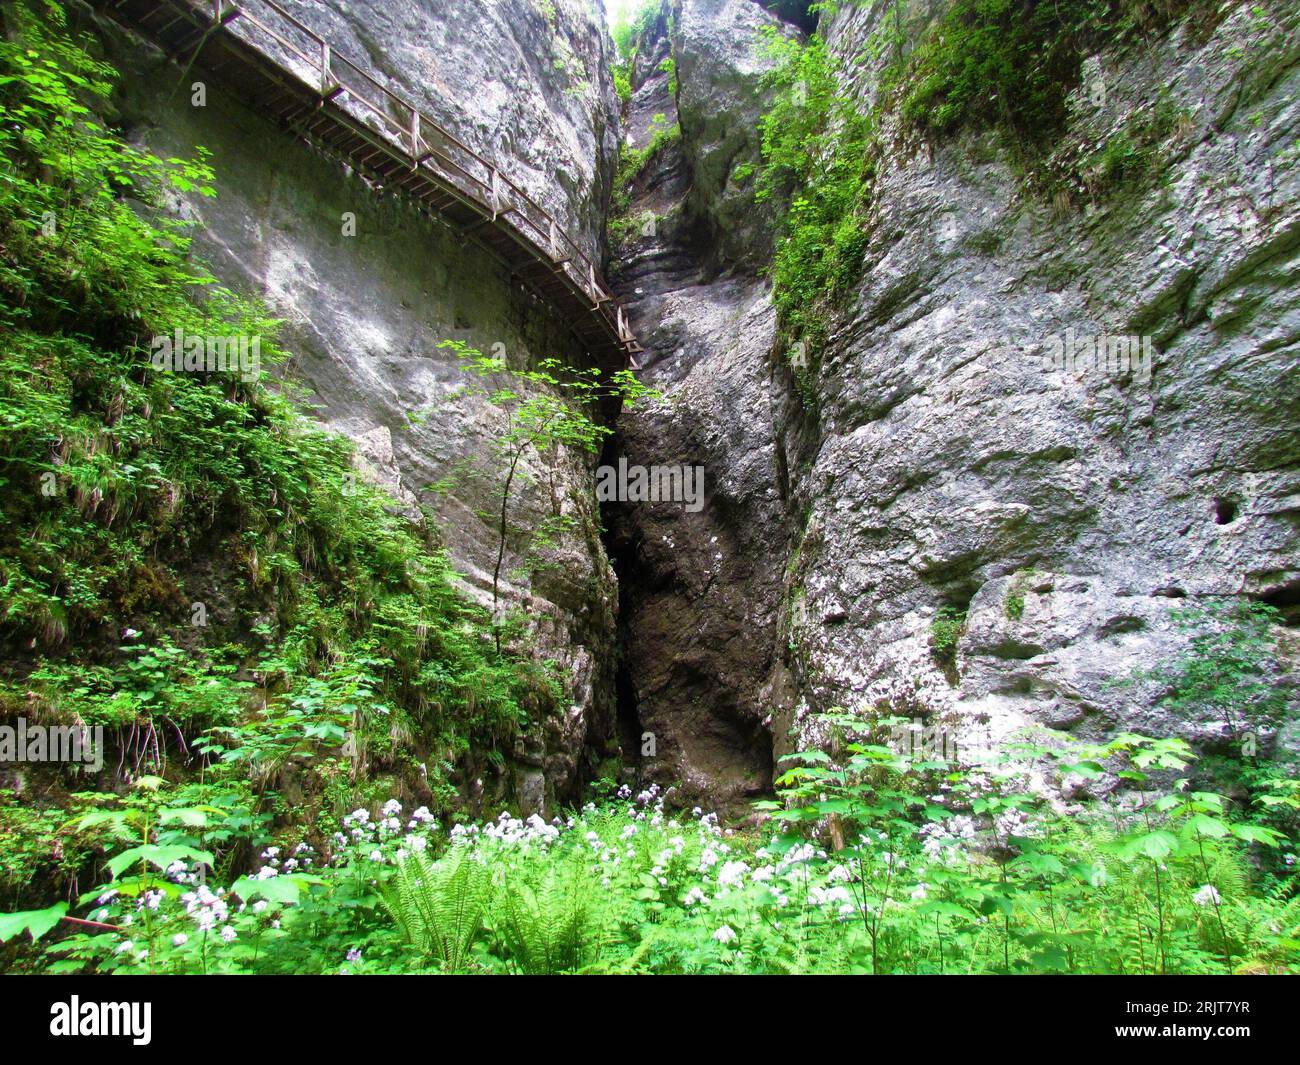 Wooden walkway leading into a narrow cave passage, next to a vertical rock wall at Pokljuka gorge in Gorenjska, Slovenia Stock Photo